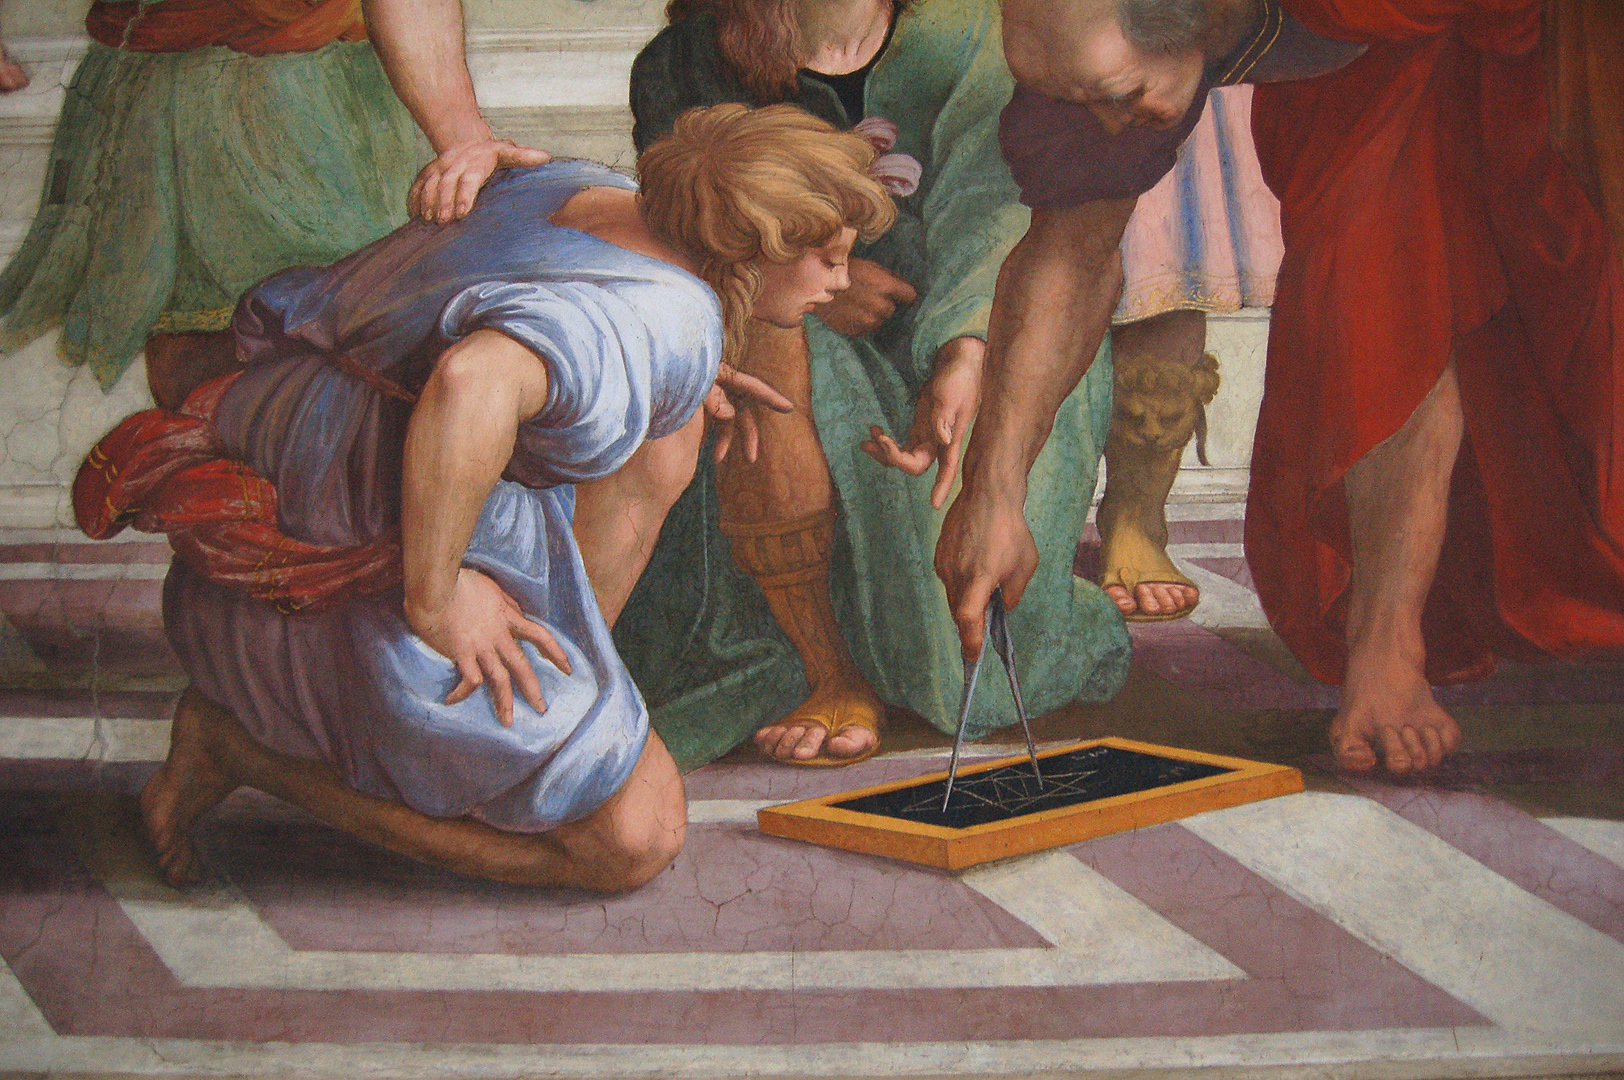 School van Athene, Rafaël, Rome; The School of Athens, Raphael, Rome